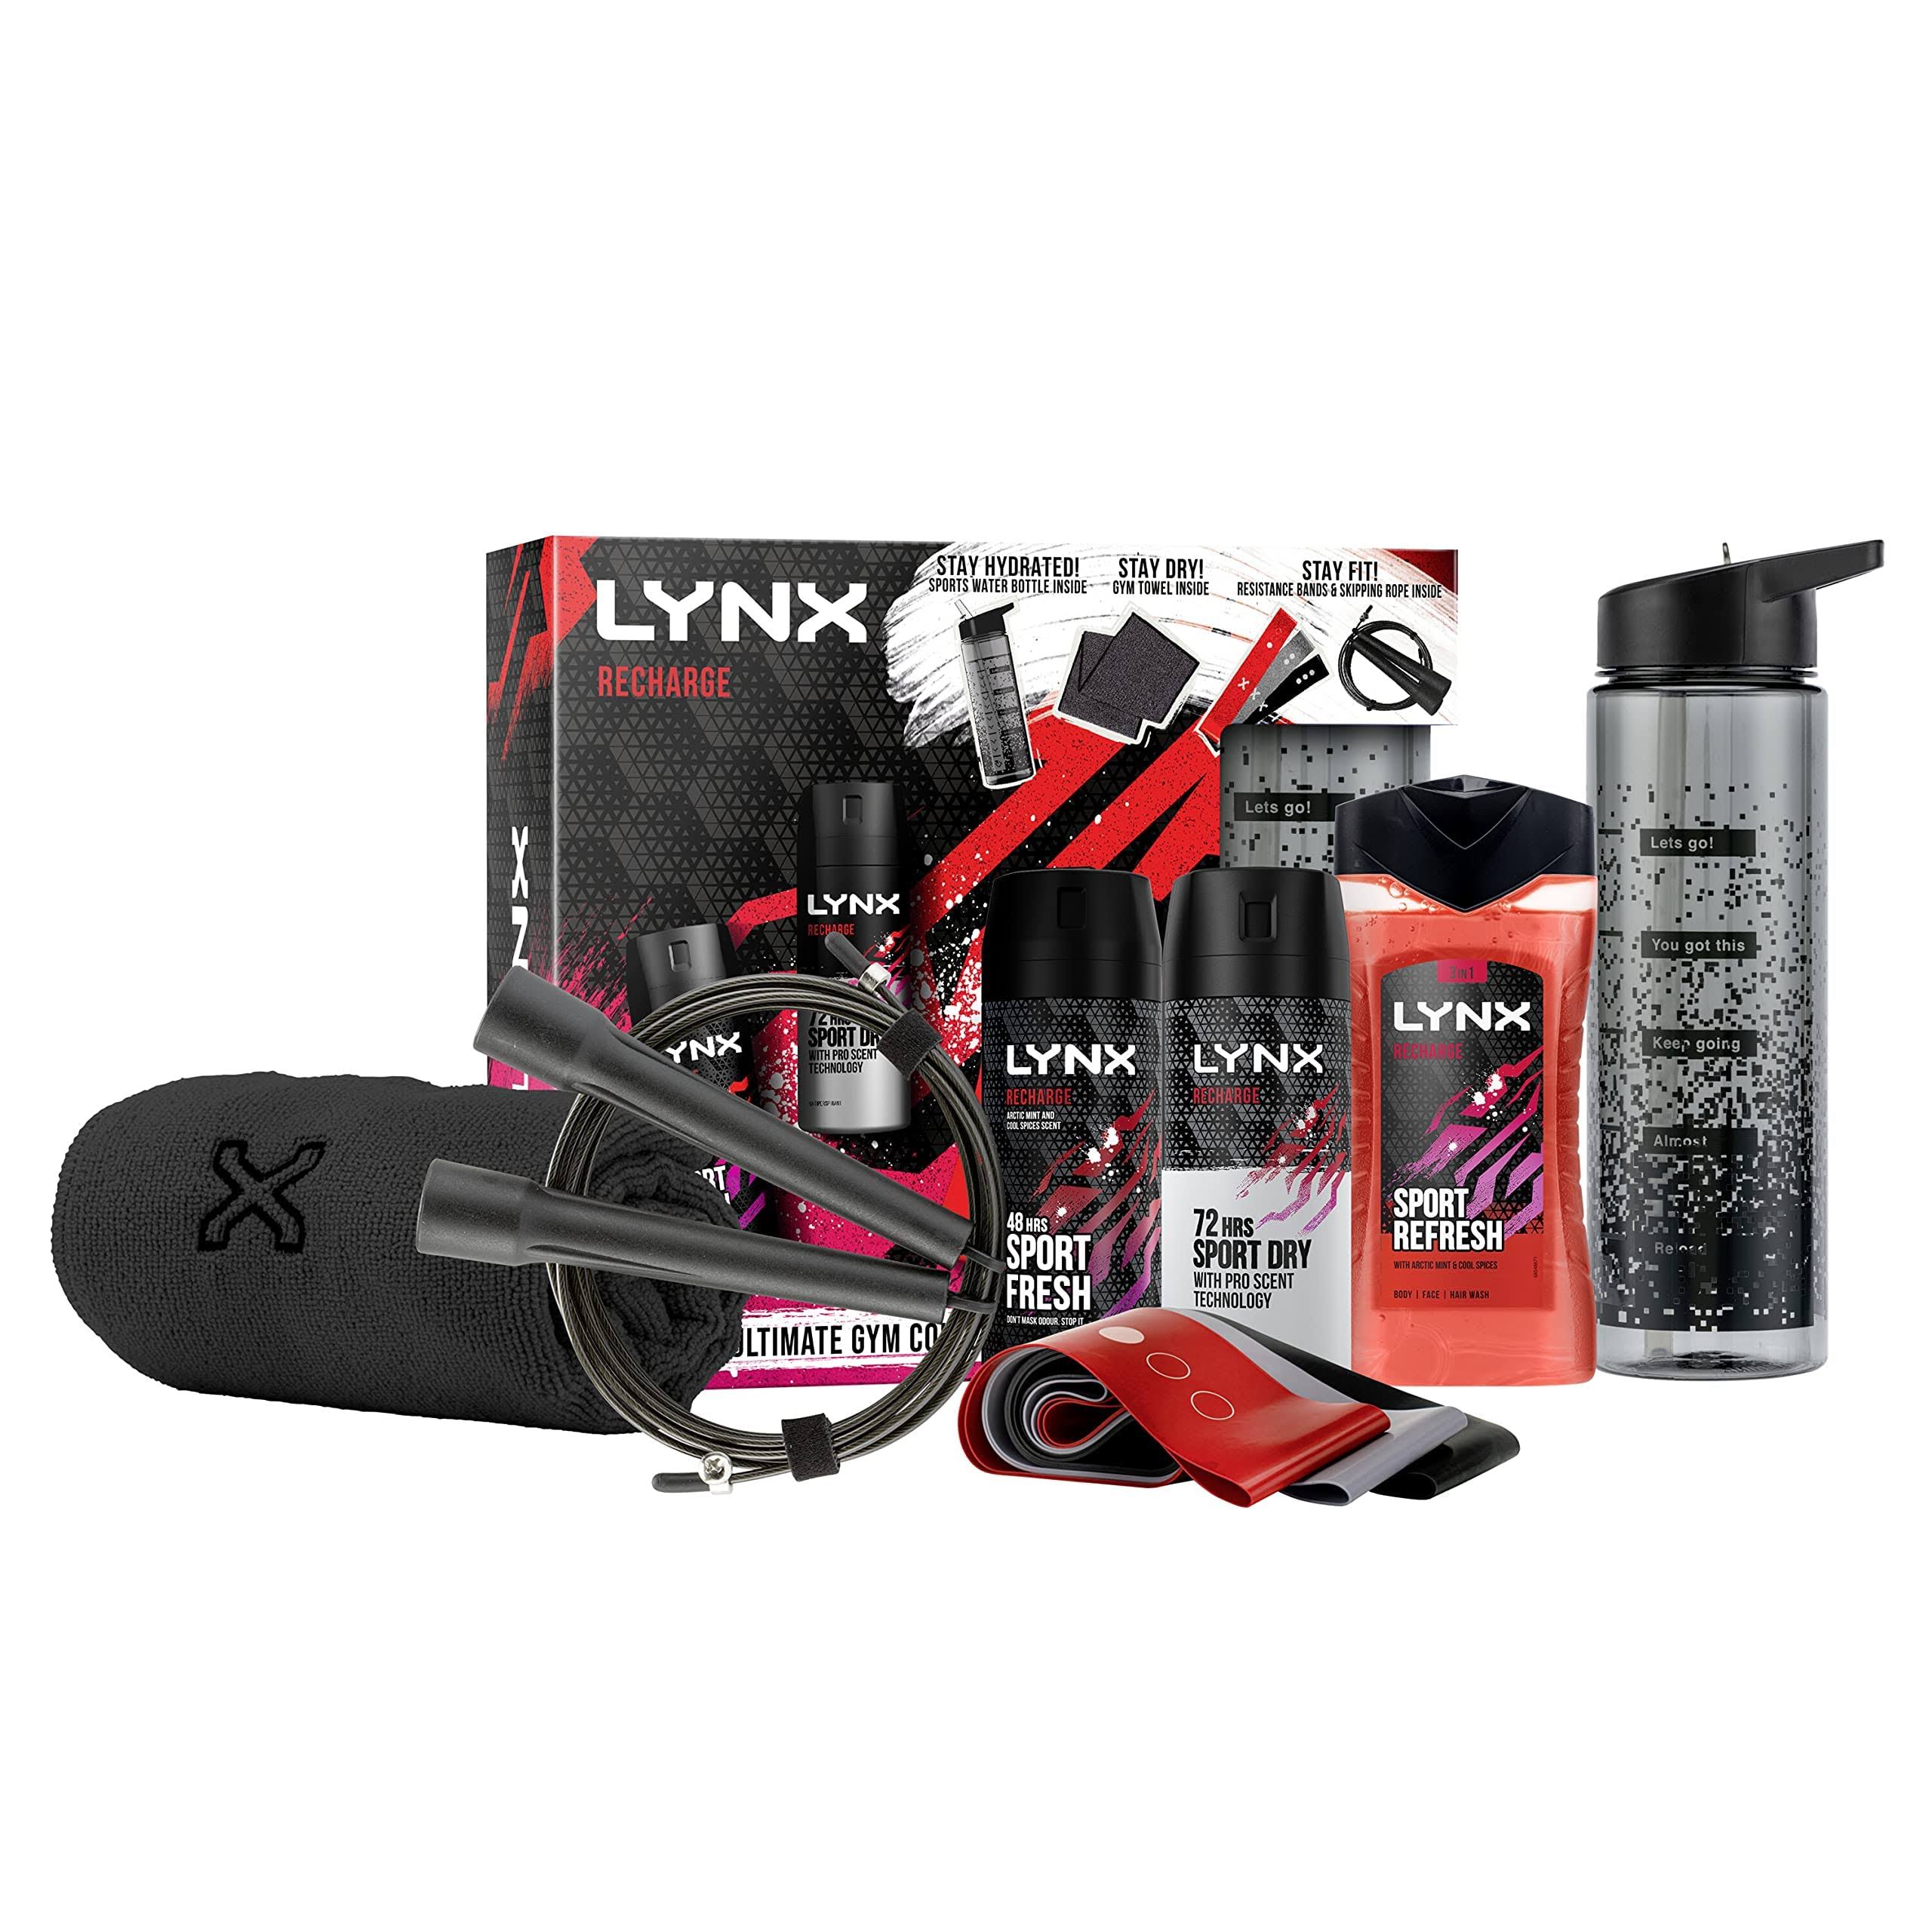 Lynx Recharge Ultimate Gym Gift Set